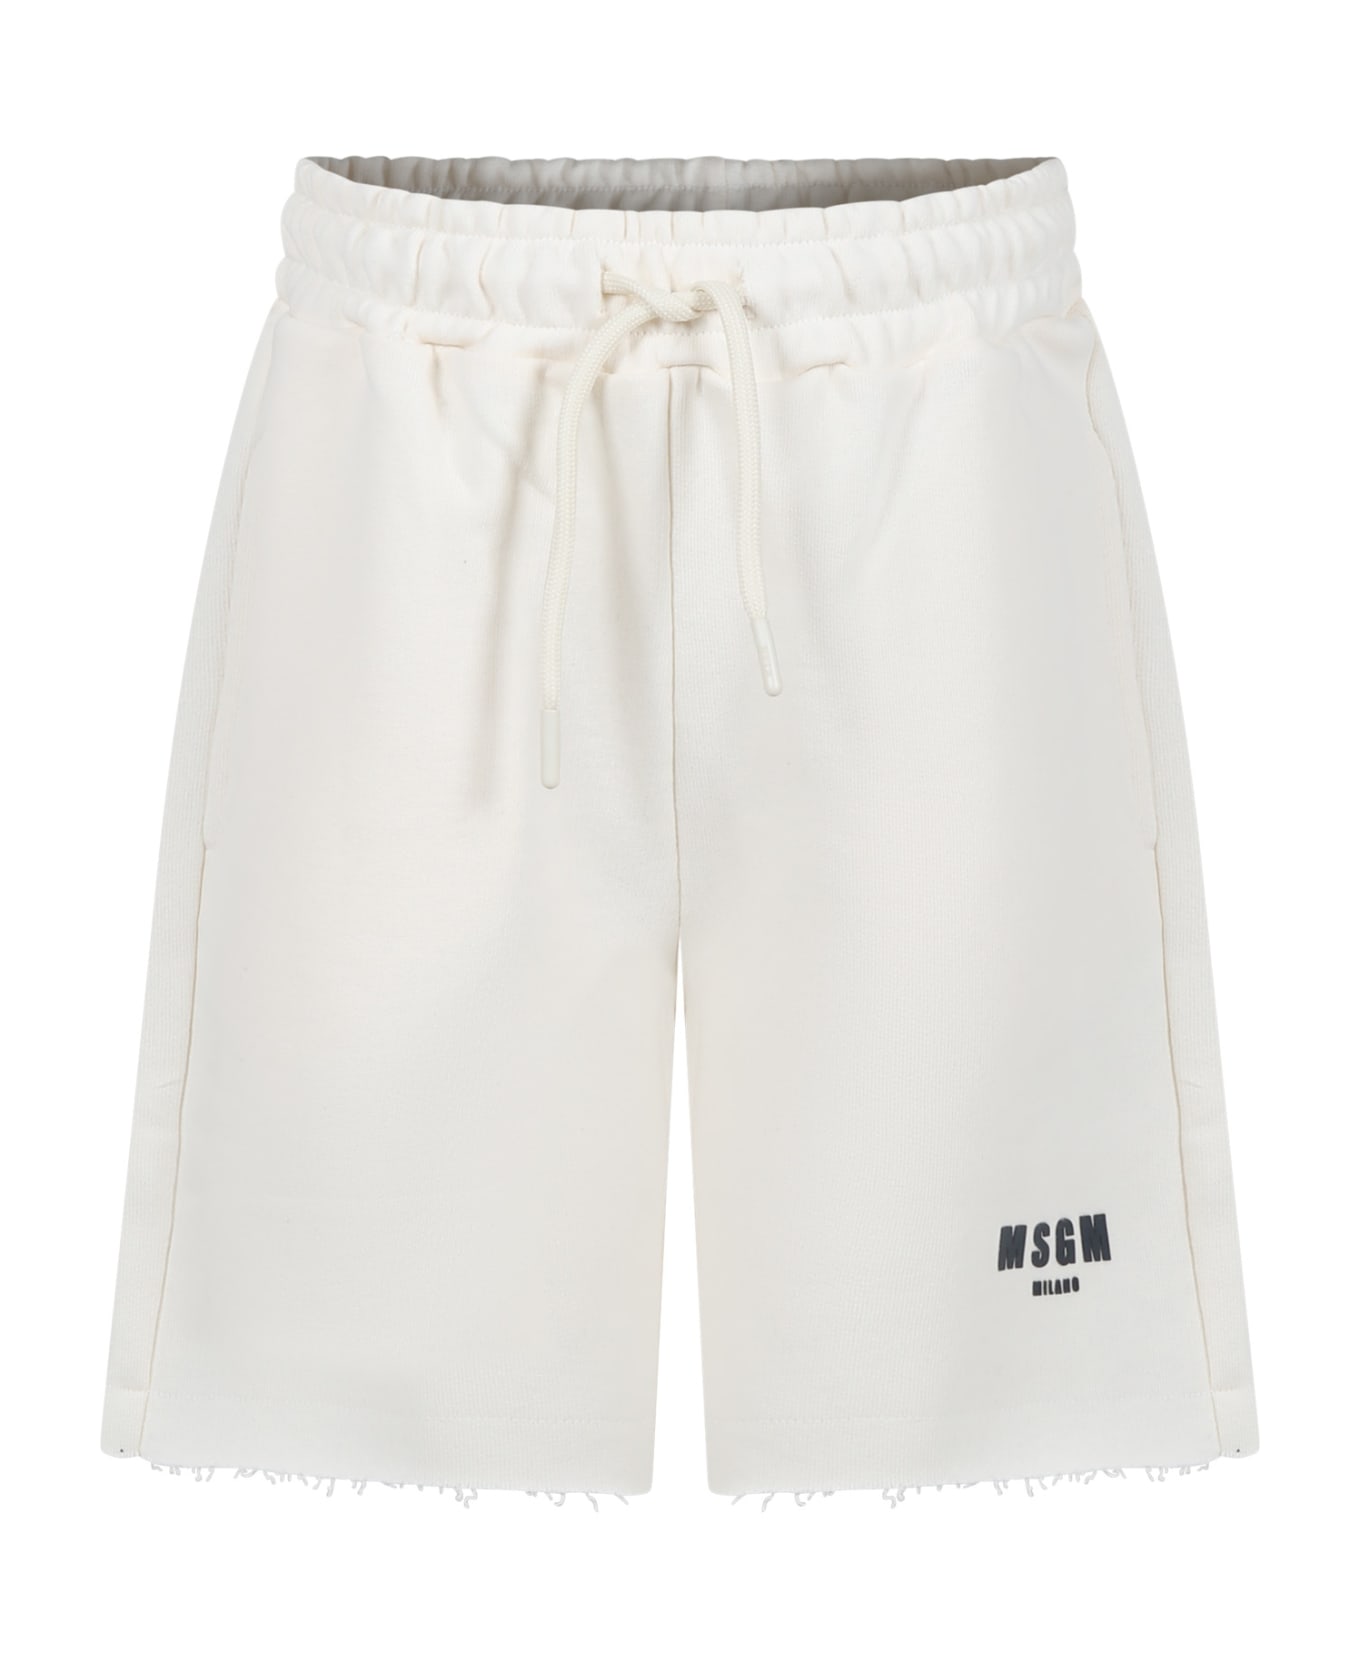 MSGM Ivory Shorts For Boy With Logo - Ivory